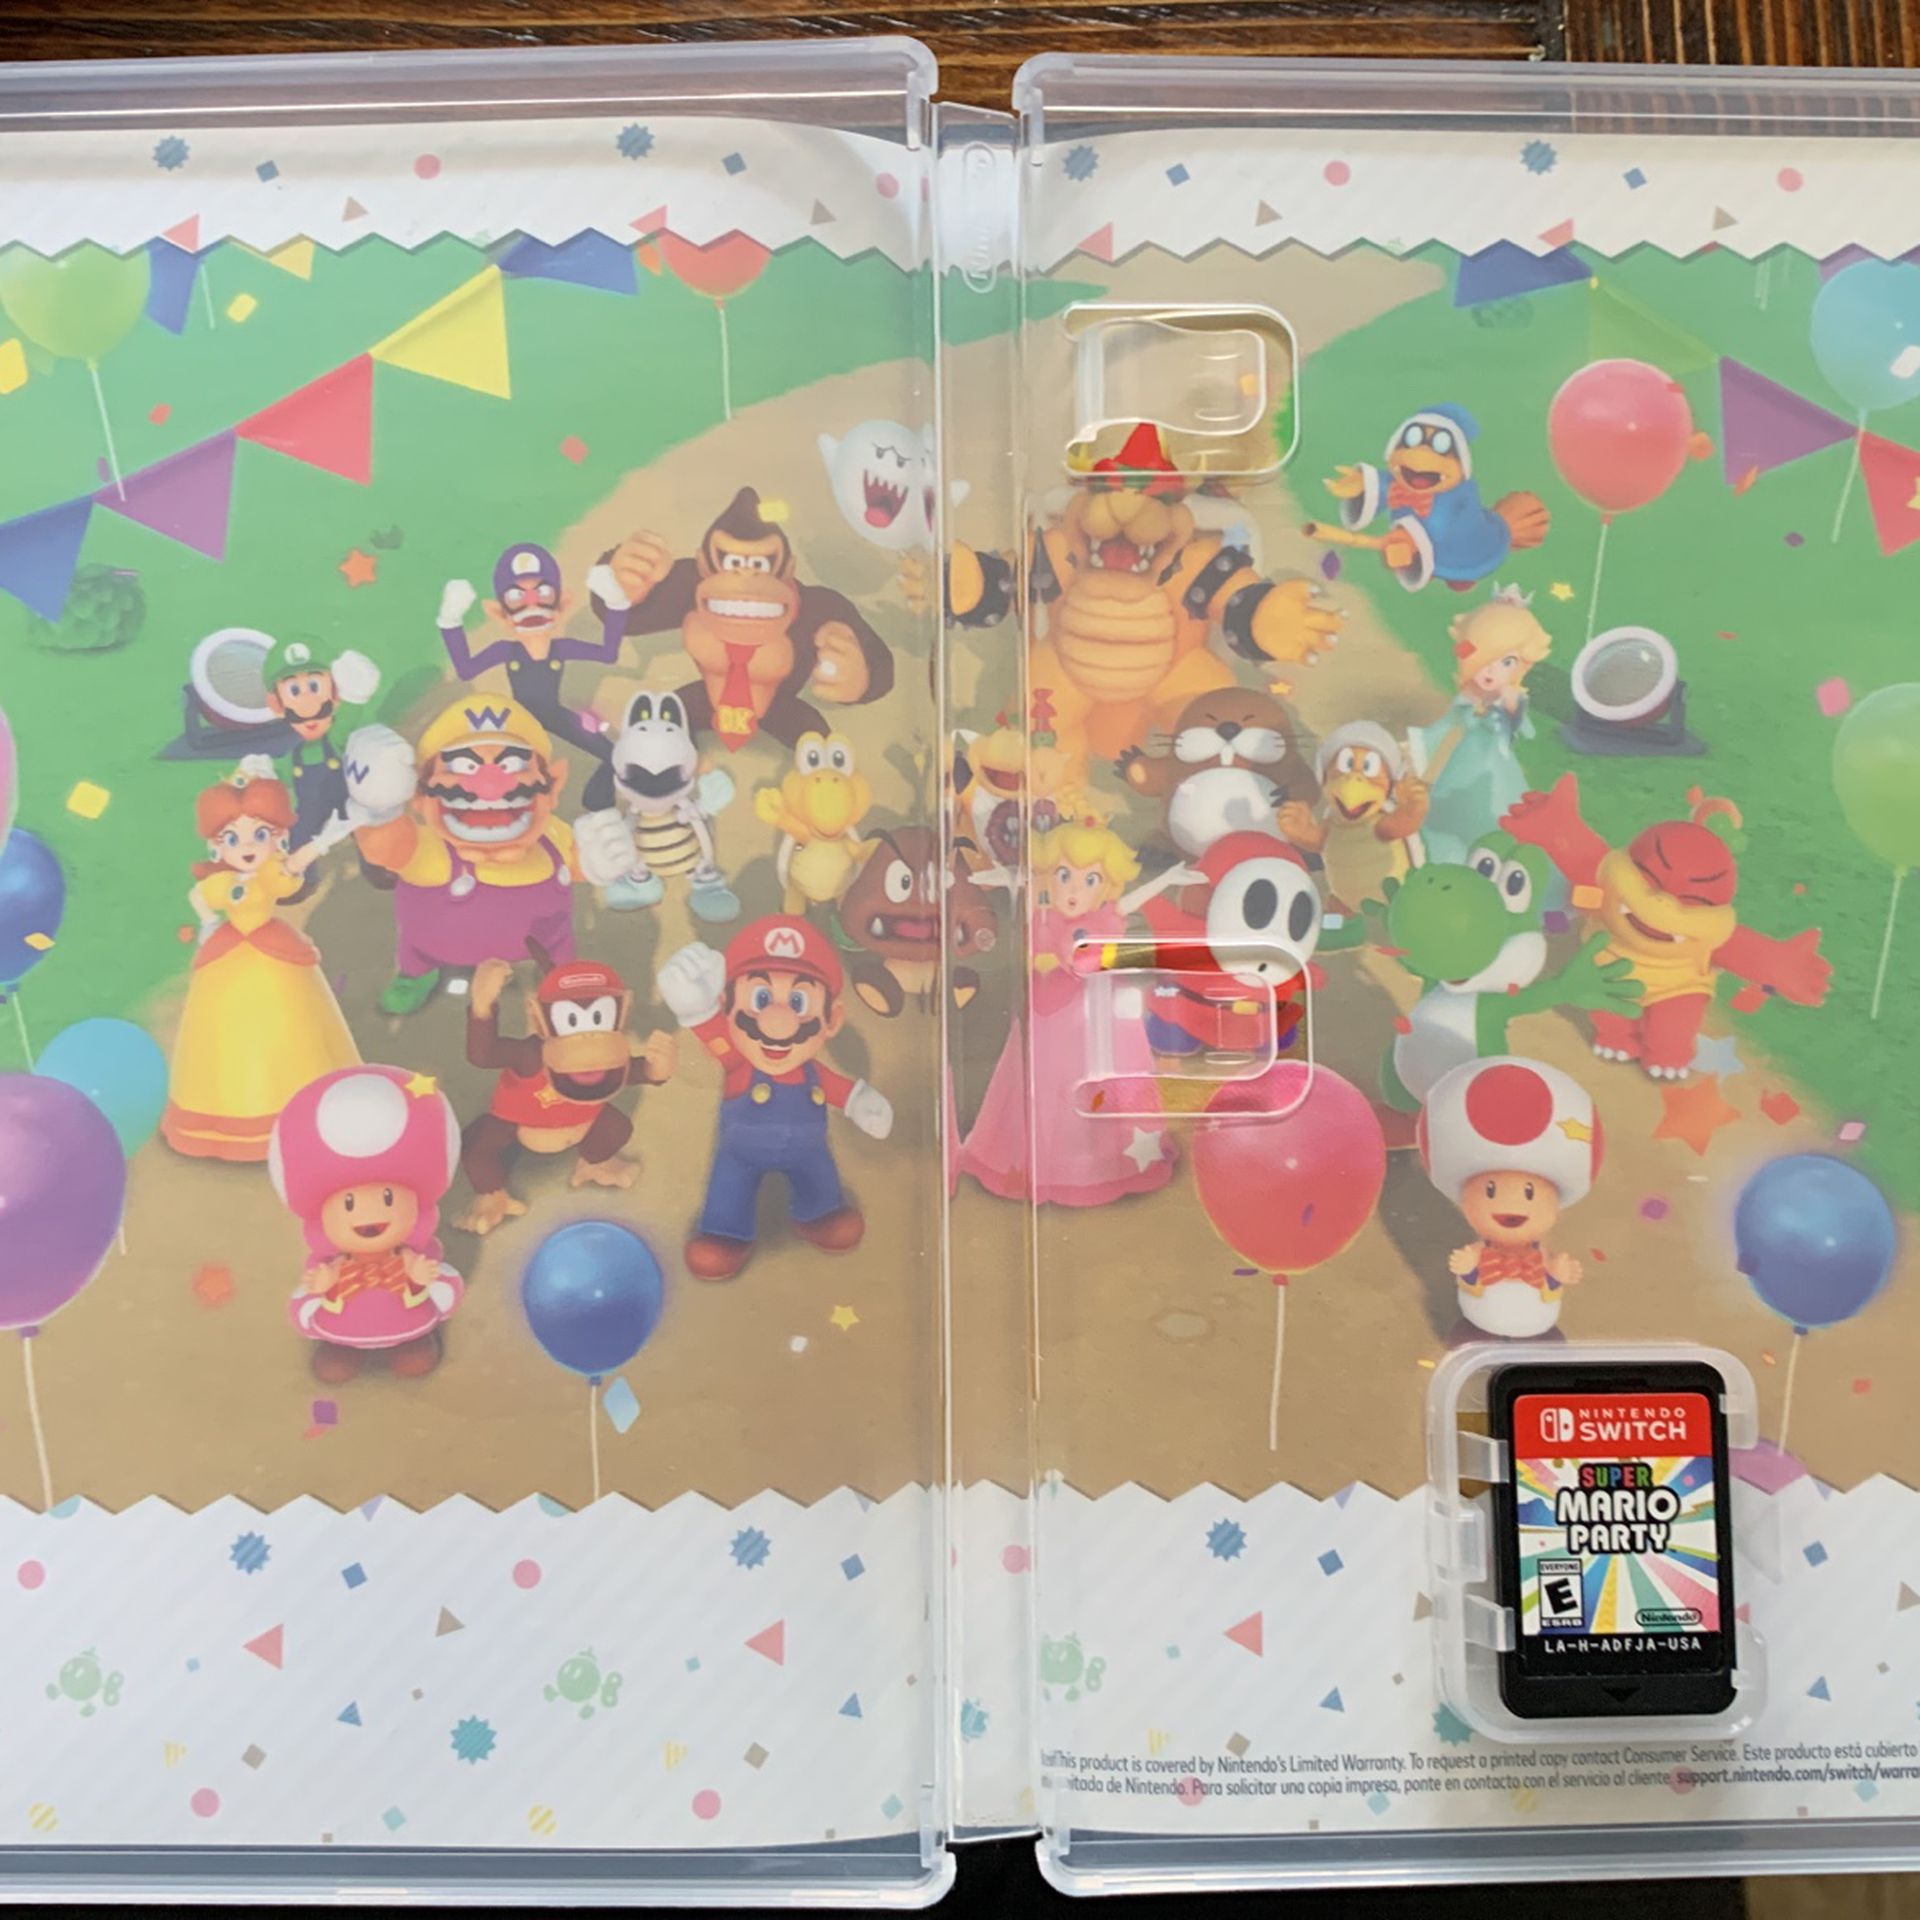 Super Mario party - Nintendo switch